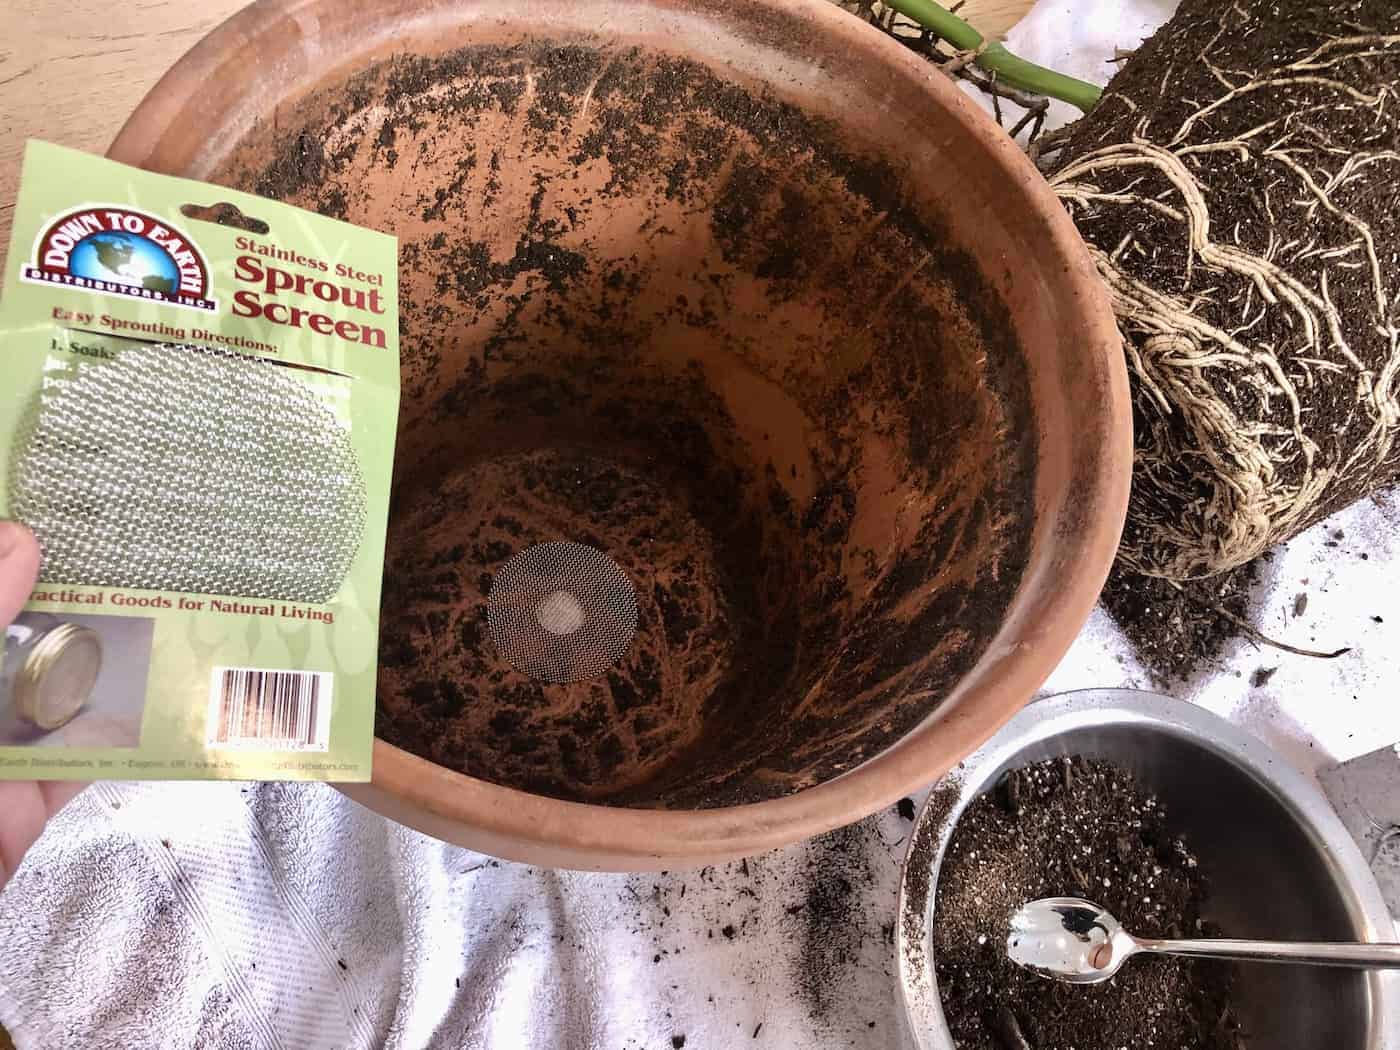 Drainage hole at bottom of planter pot